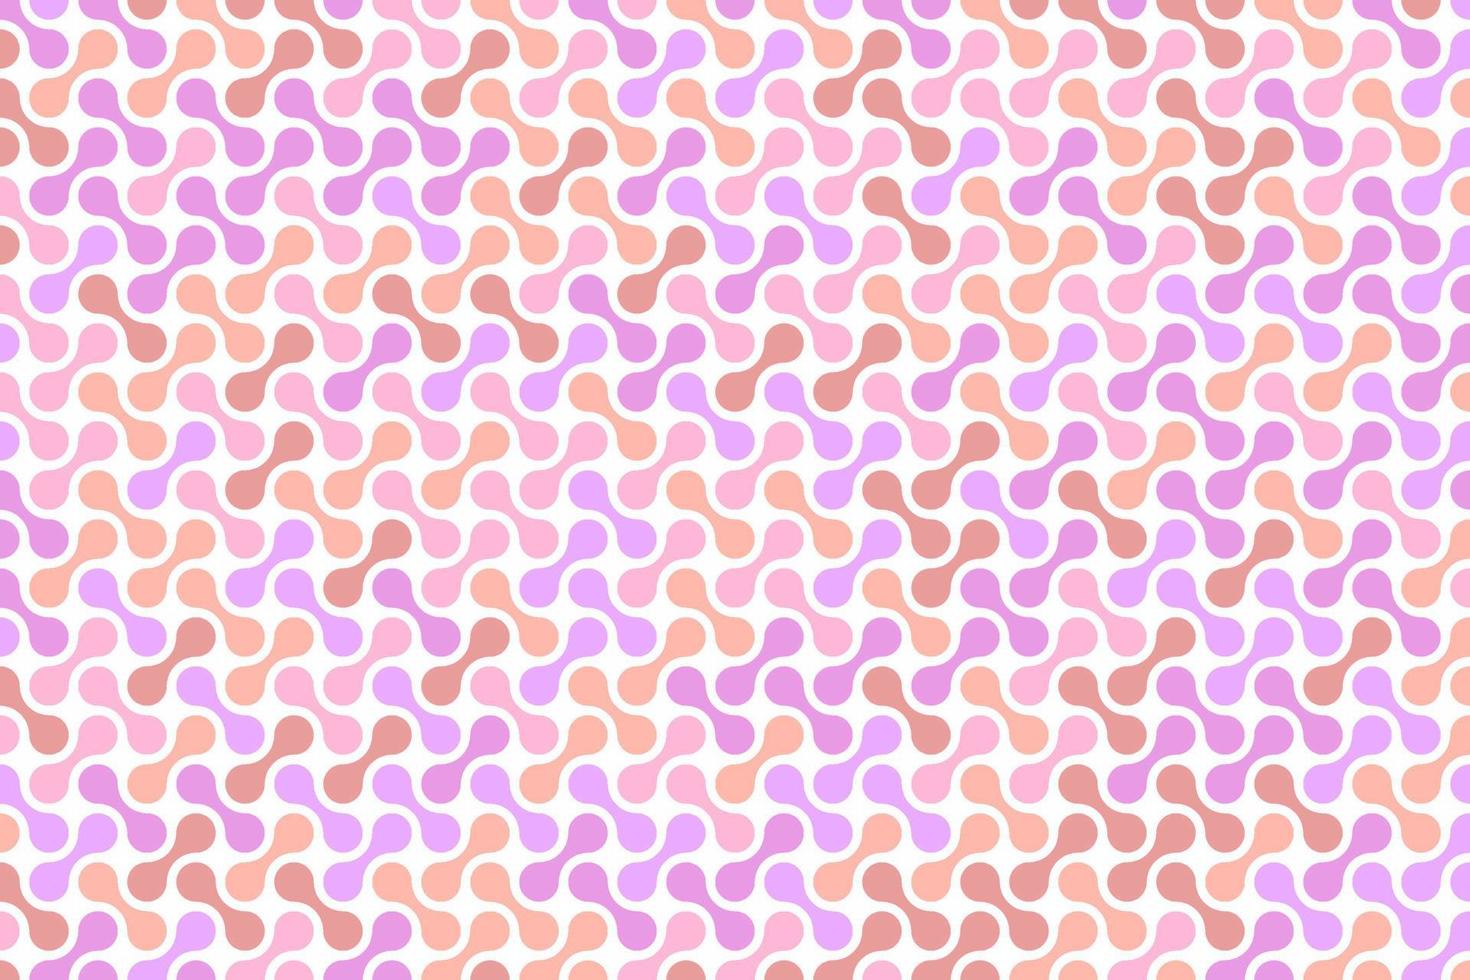 rosa, púrpura, y rojo metaballs sin costura modelo vector Arte. resumen moderno albóndiga gotas mosaico vector antecedentes.